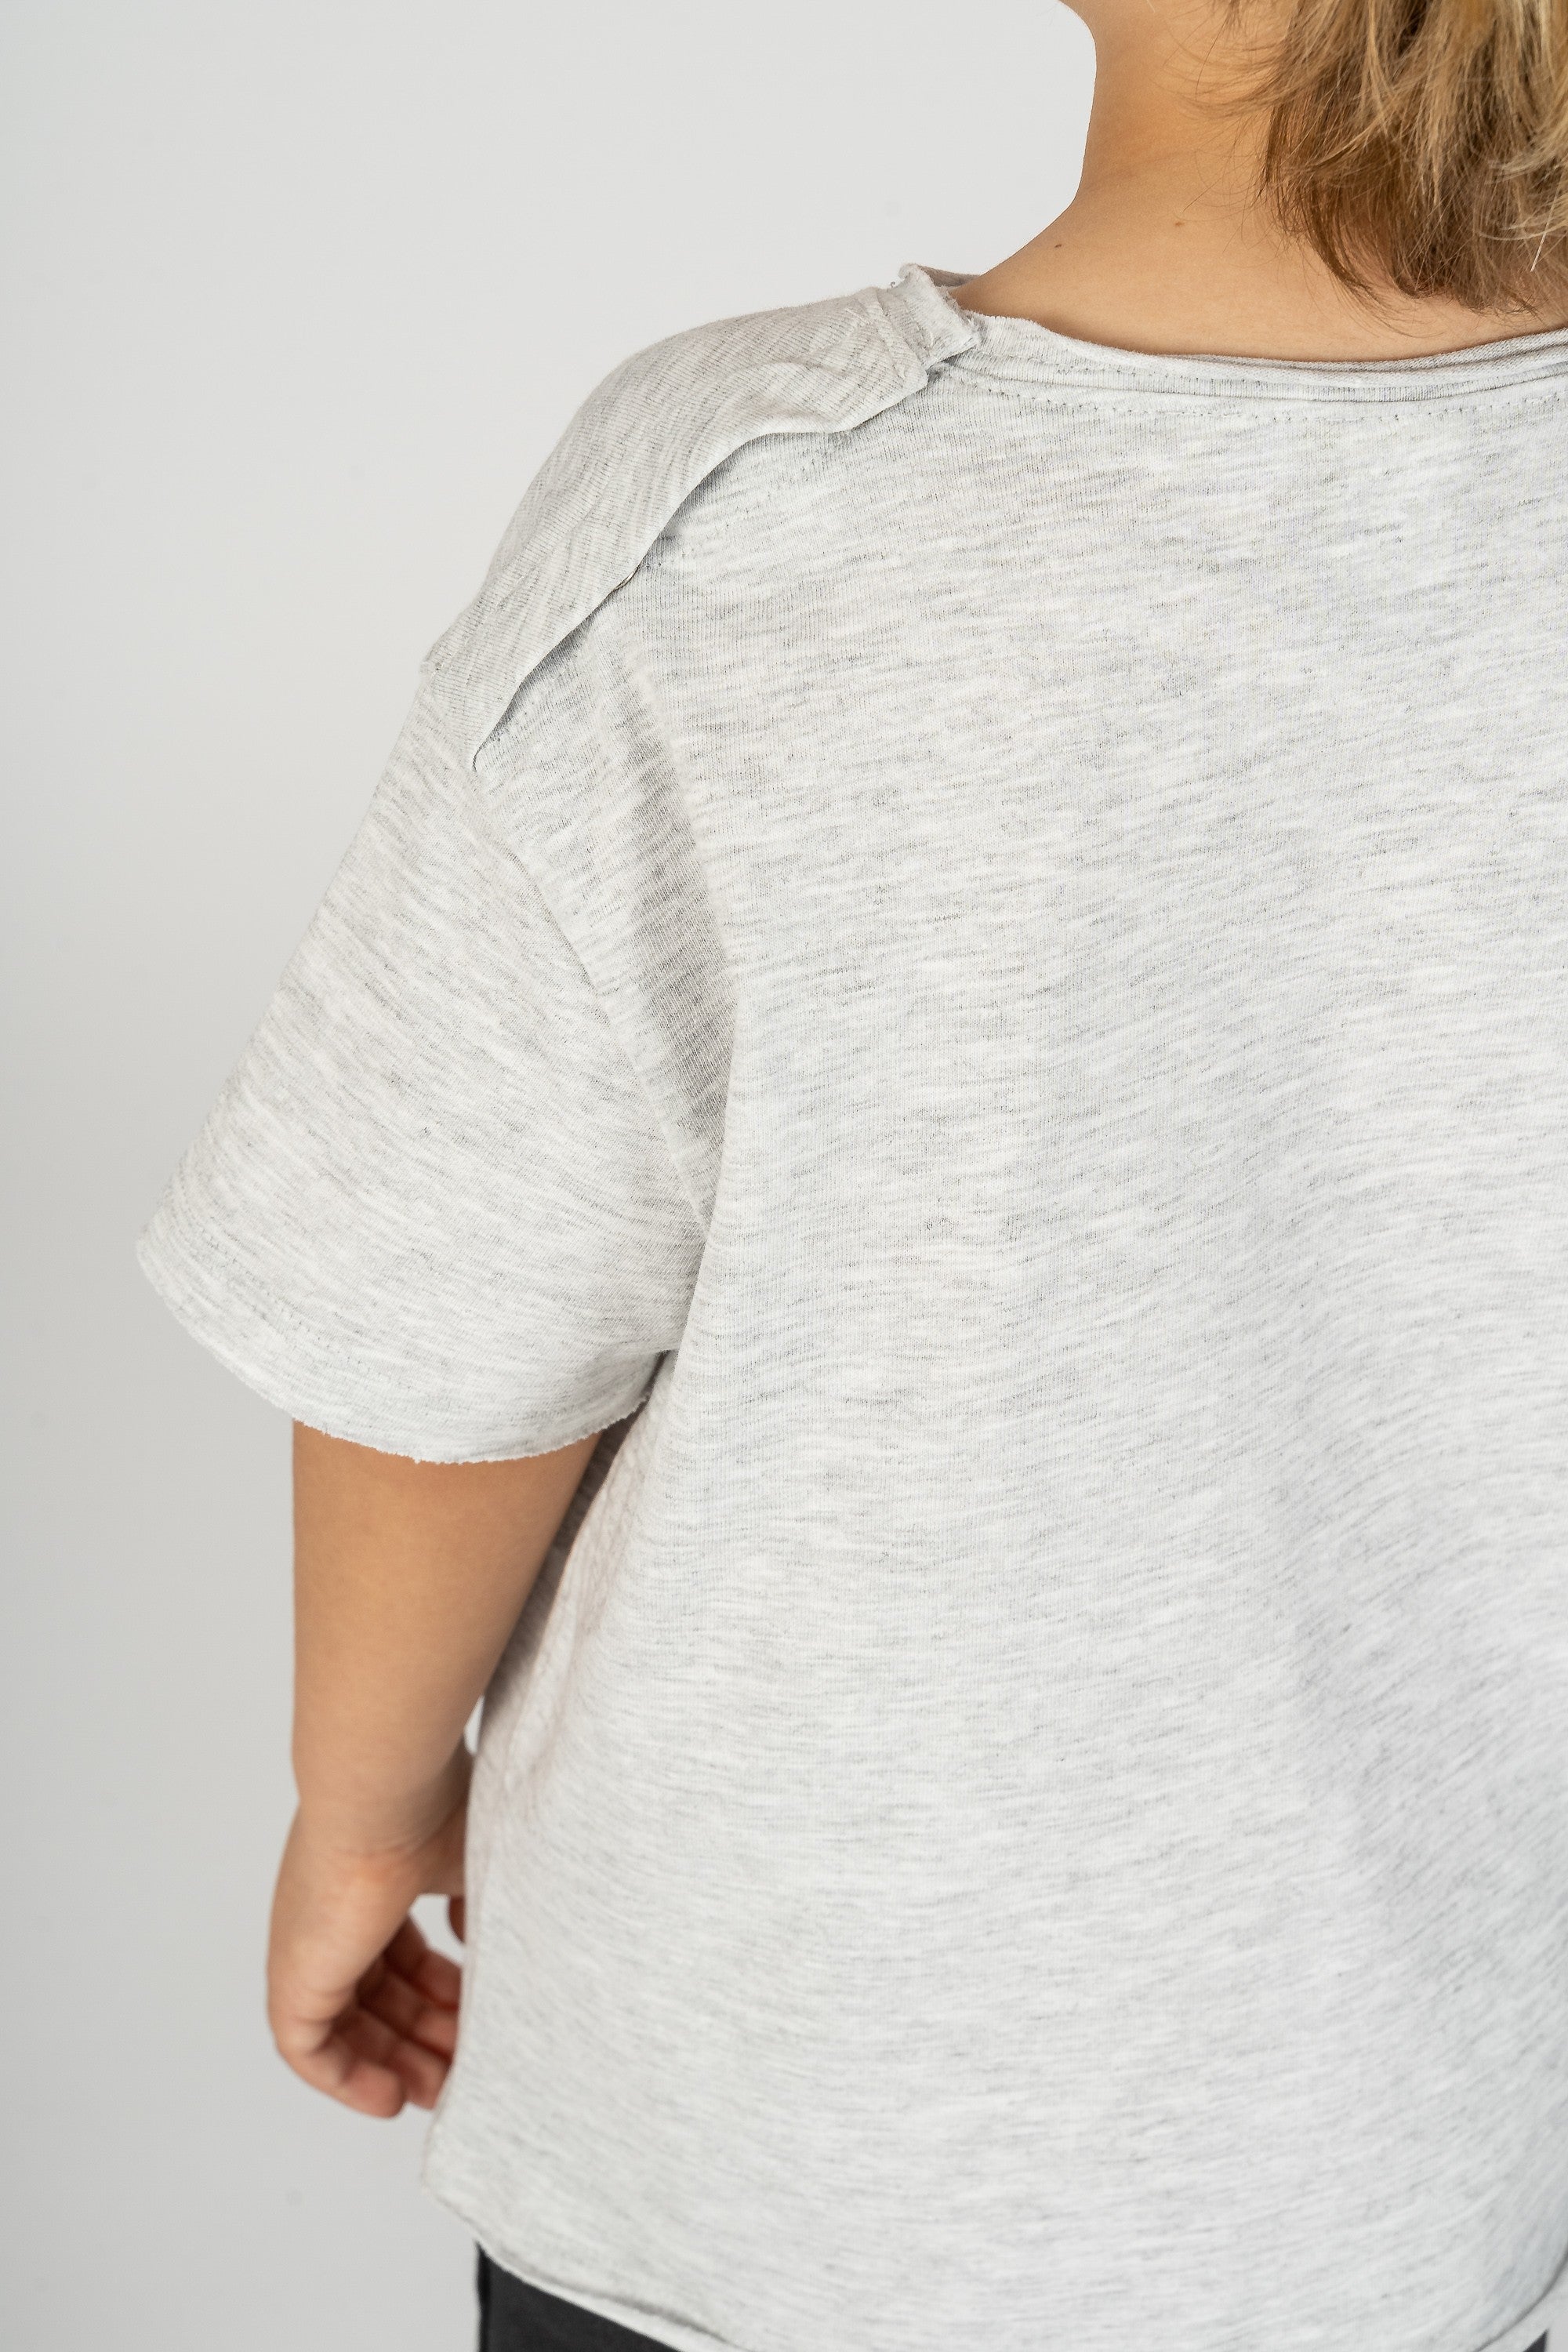 Camiseta de bebé gris VERANO/Outlet